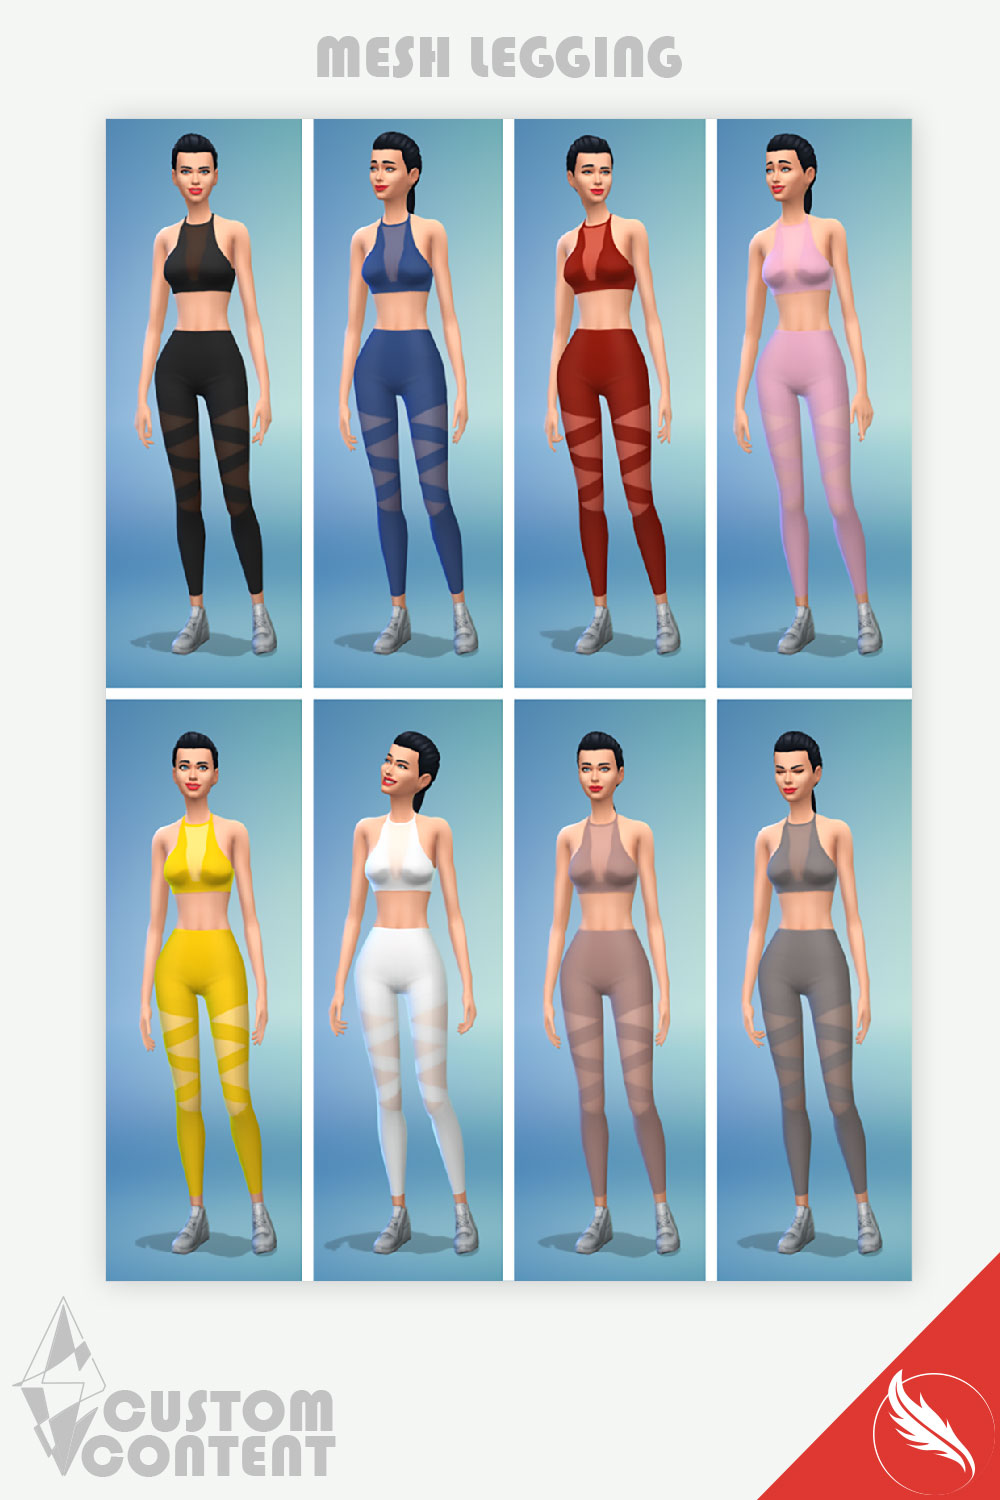 The sims 4 sportswear mesh legging